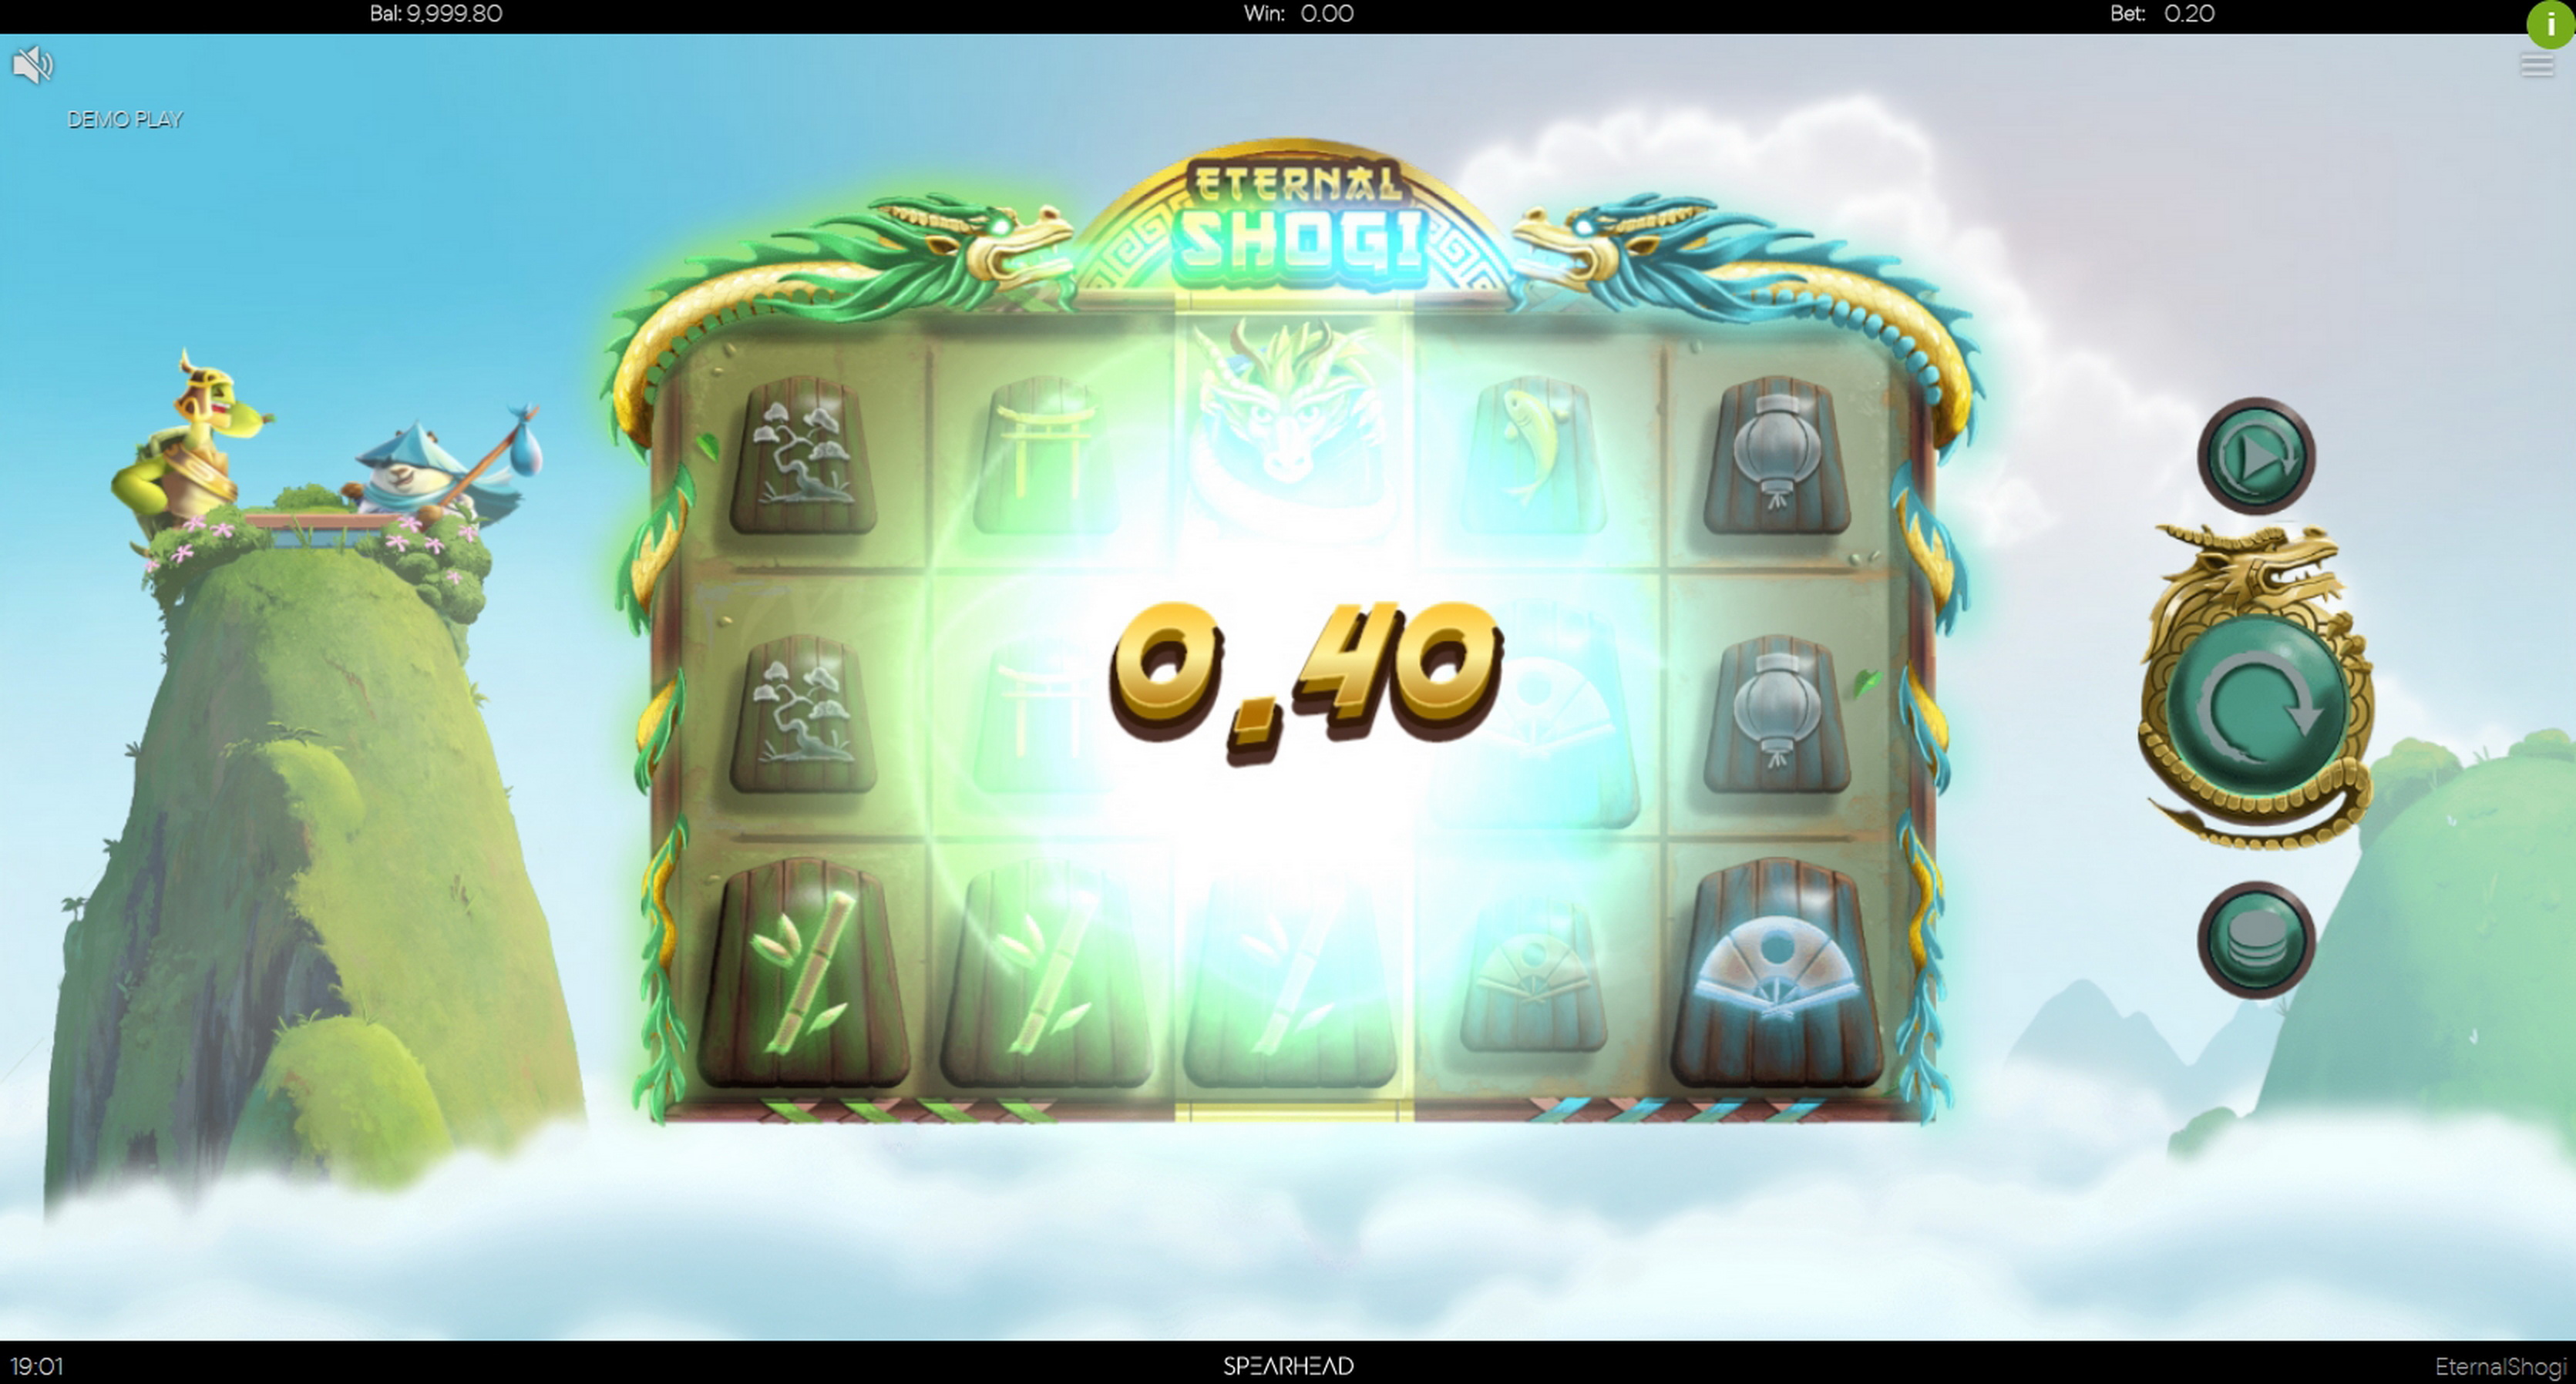 Win Money in Eternal Shogi Free Slot Game by Spearhead Studios